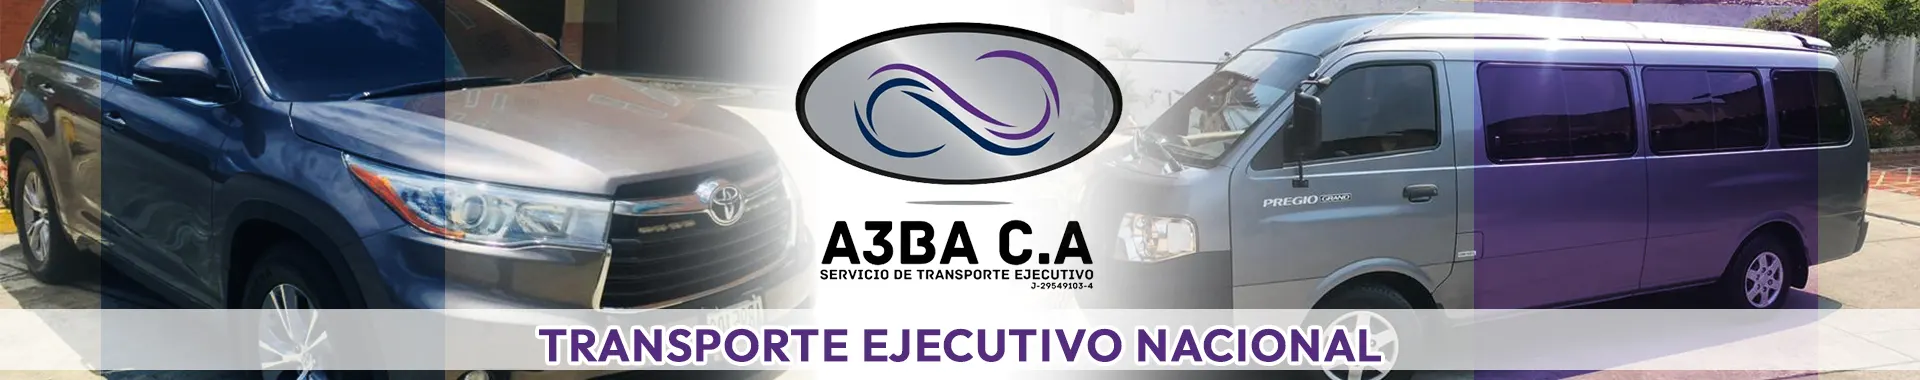 Imagen 1 del perfil de Servicio de Transporte Ejecutivo A3BA